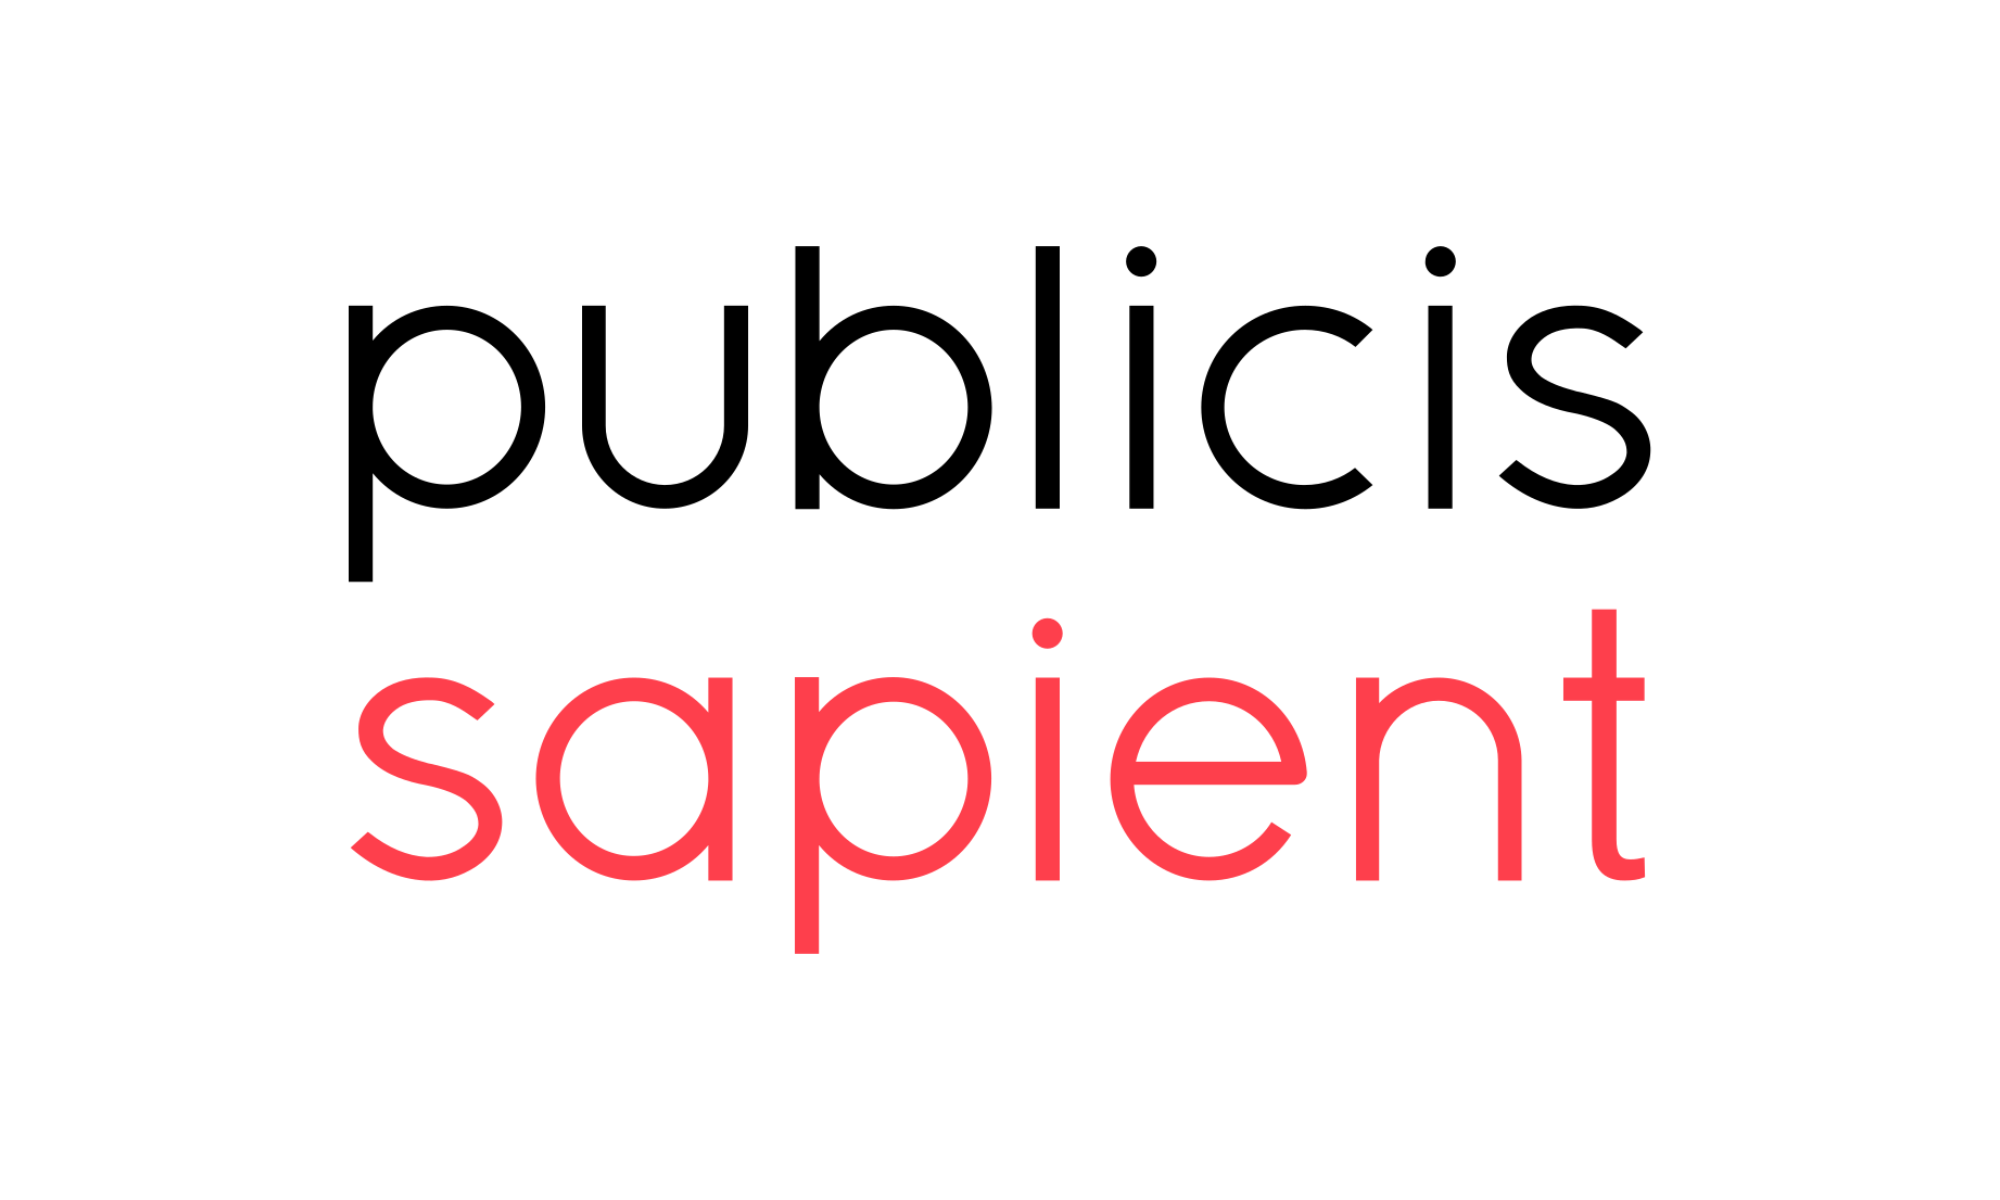 Publicis Sapient Logo